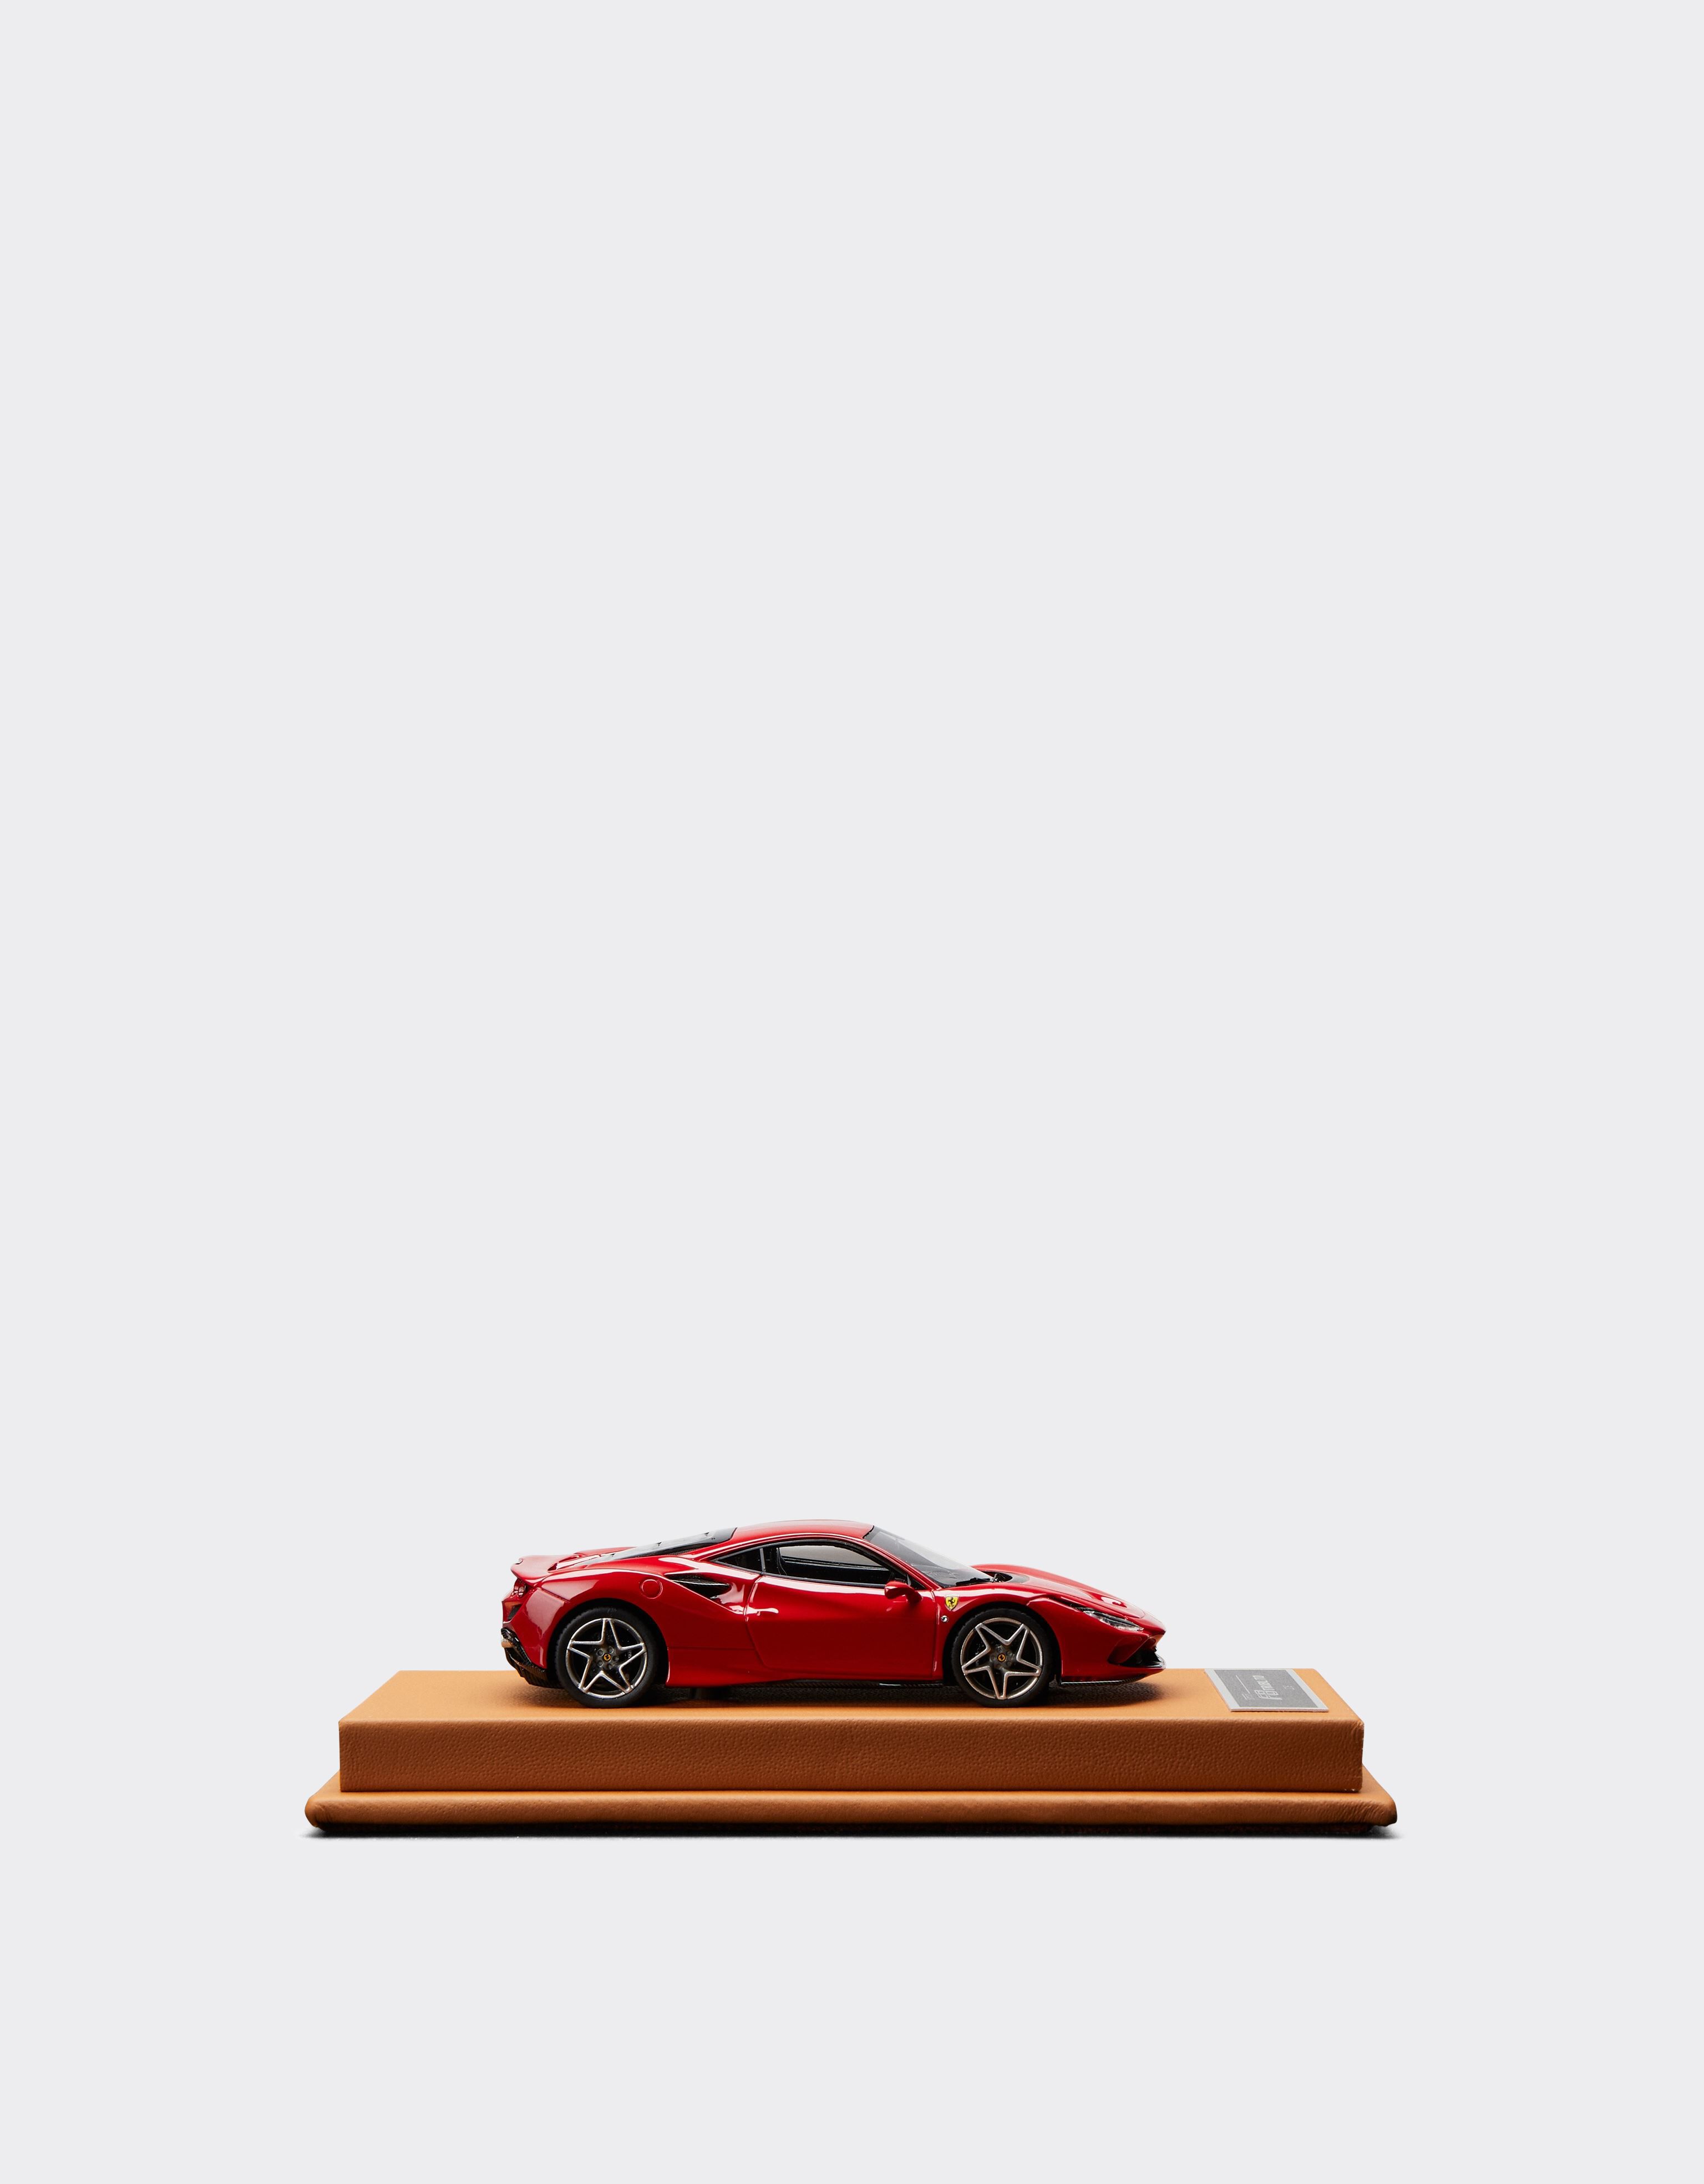 Ferrari Maqueta Ferrari F8 Tributo a escala 1:43 Rojo 47297f